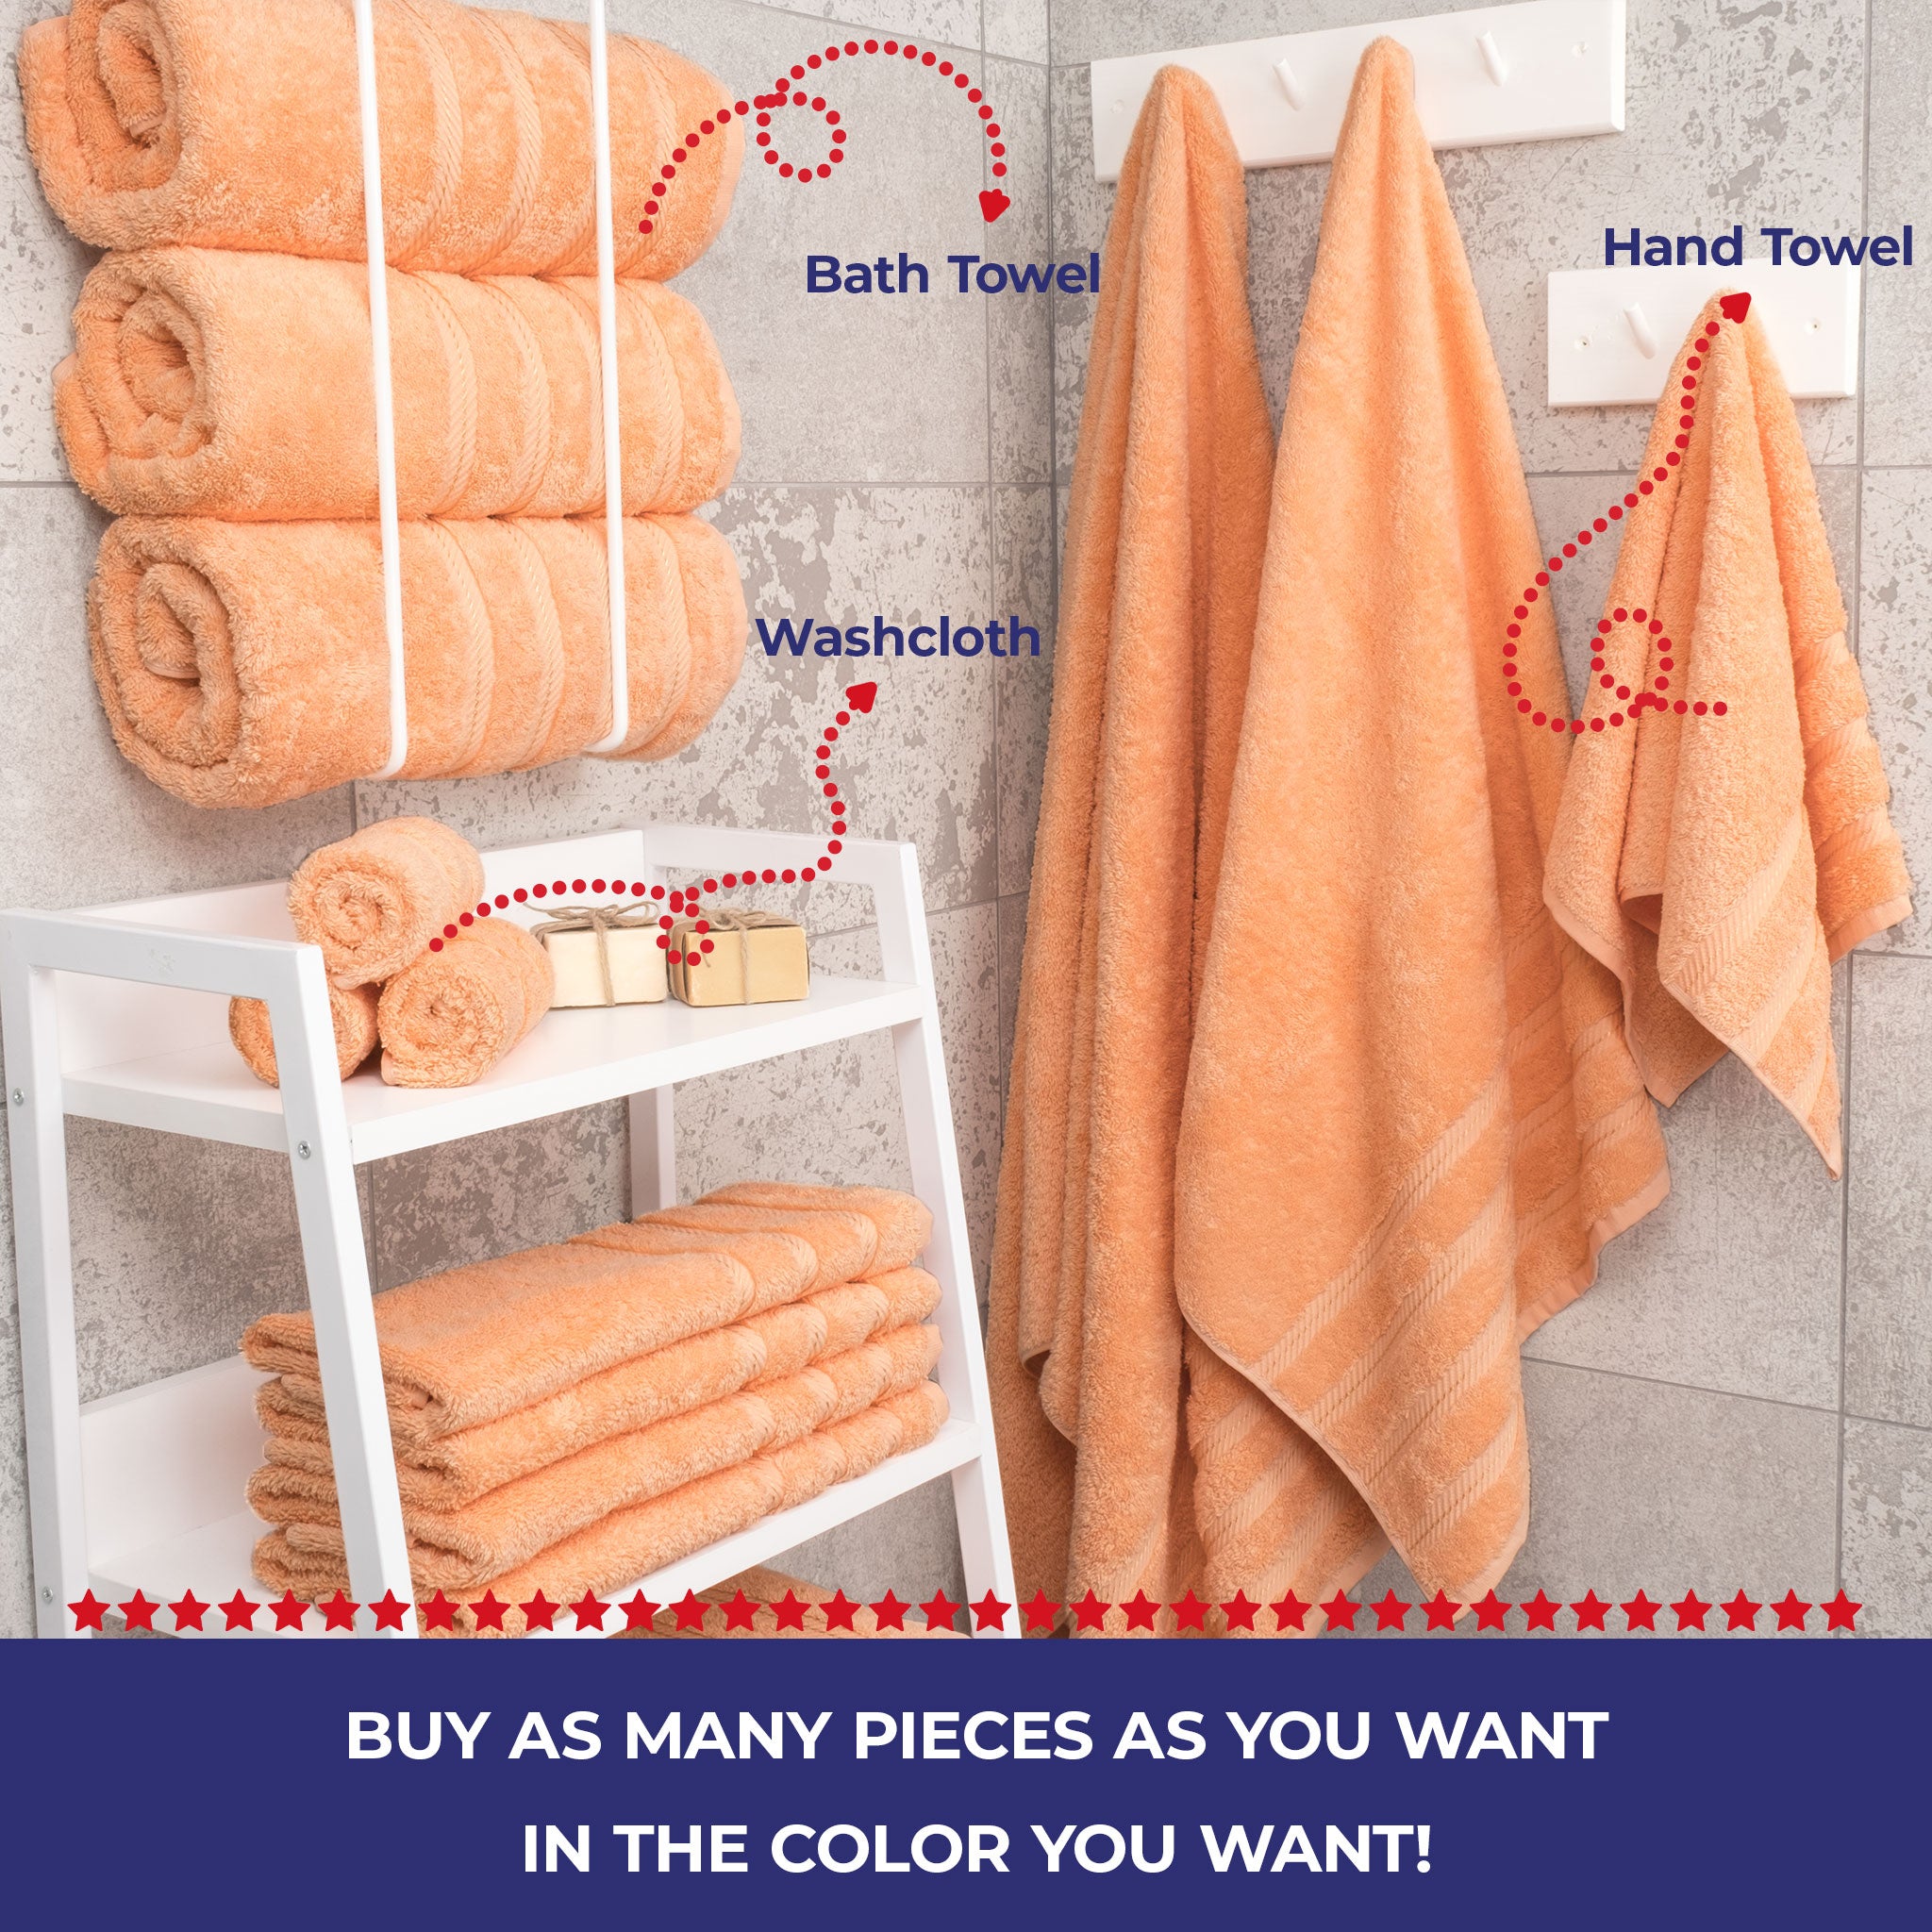 American Soft Linen - Single Piece Turkish Cotton Bath Towels - Malibu-Peach - 4